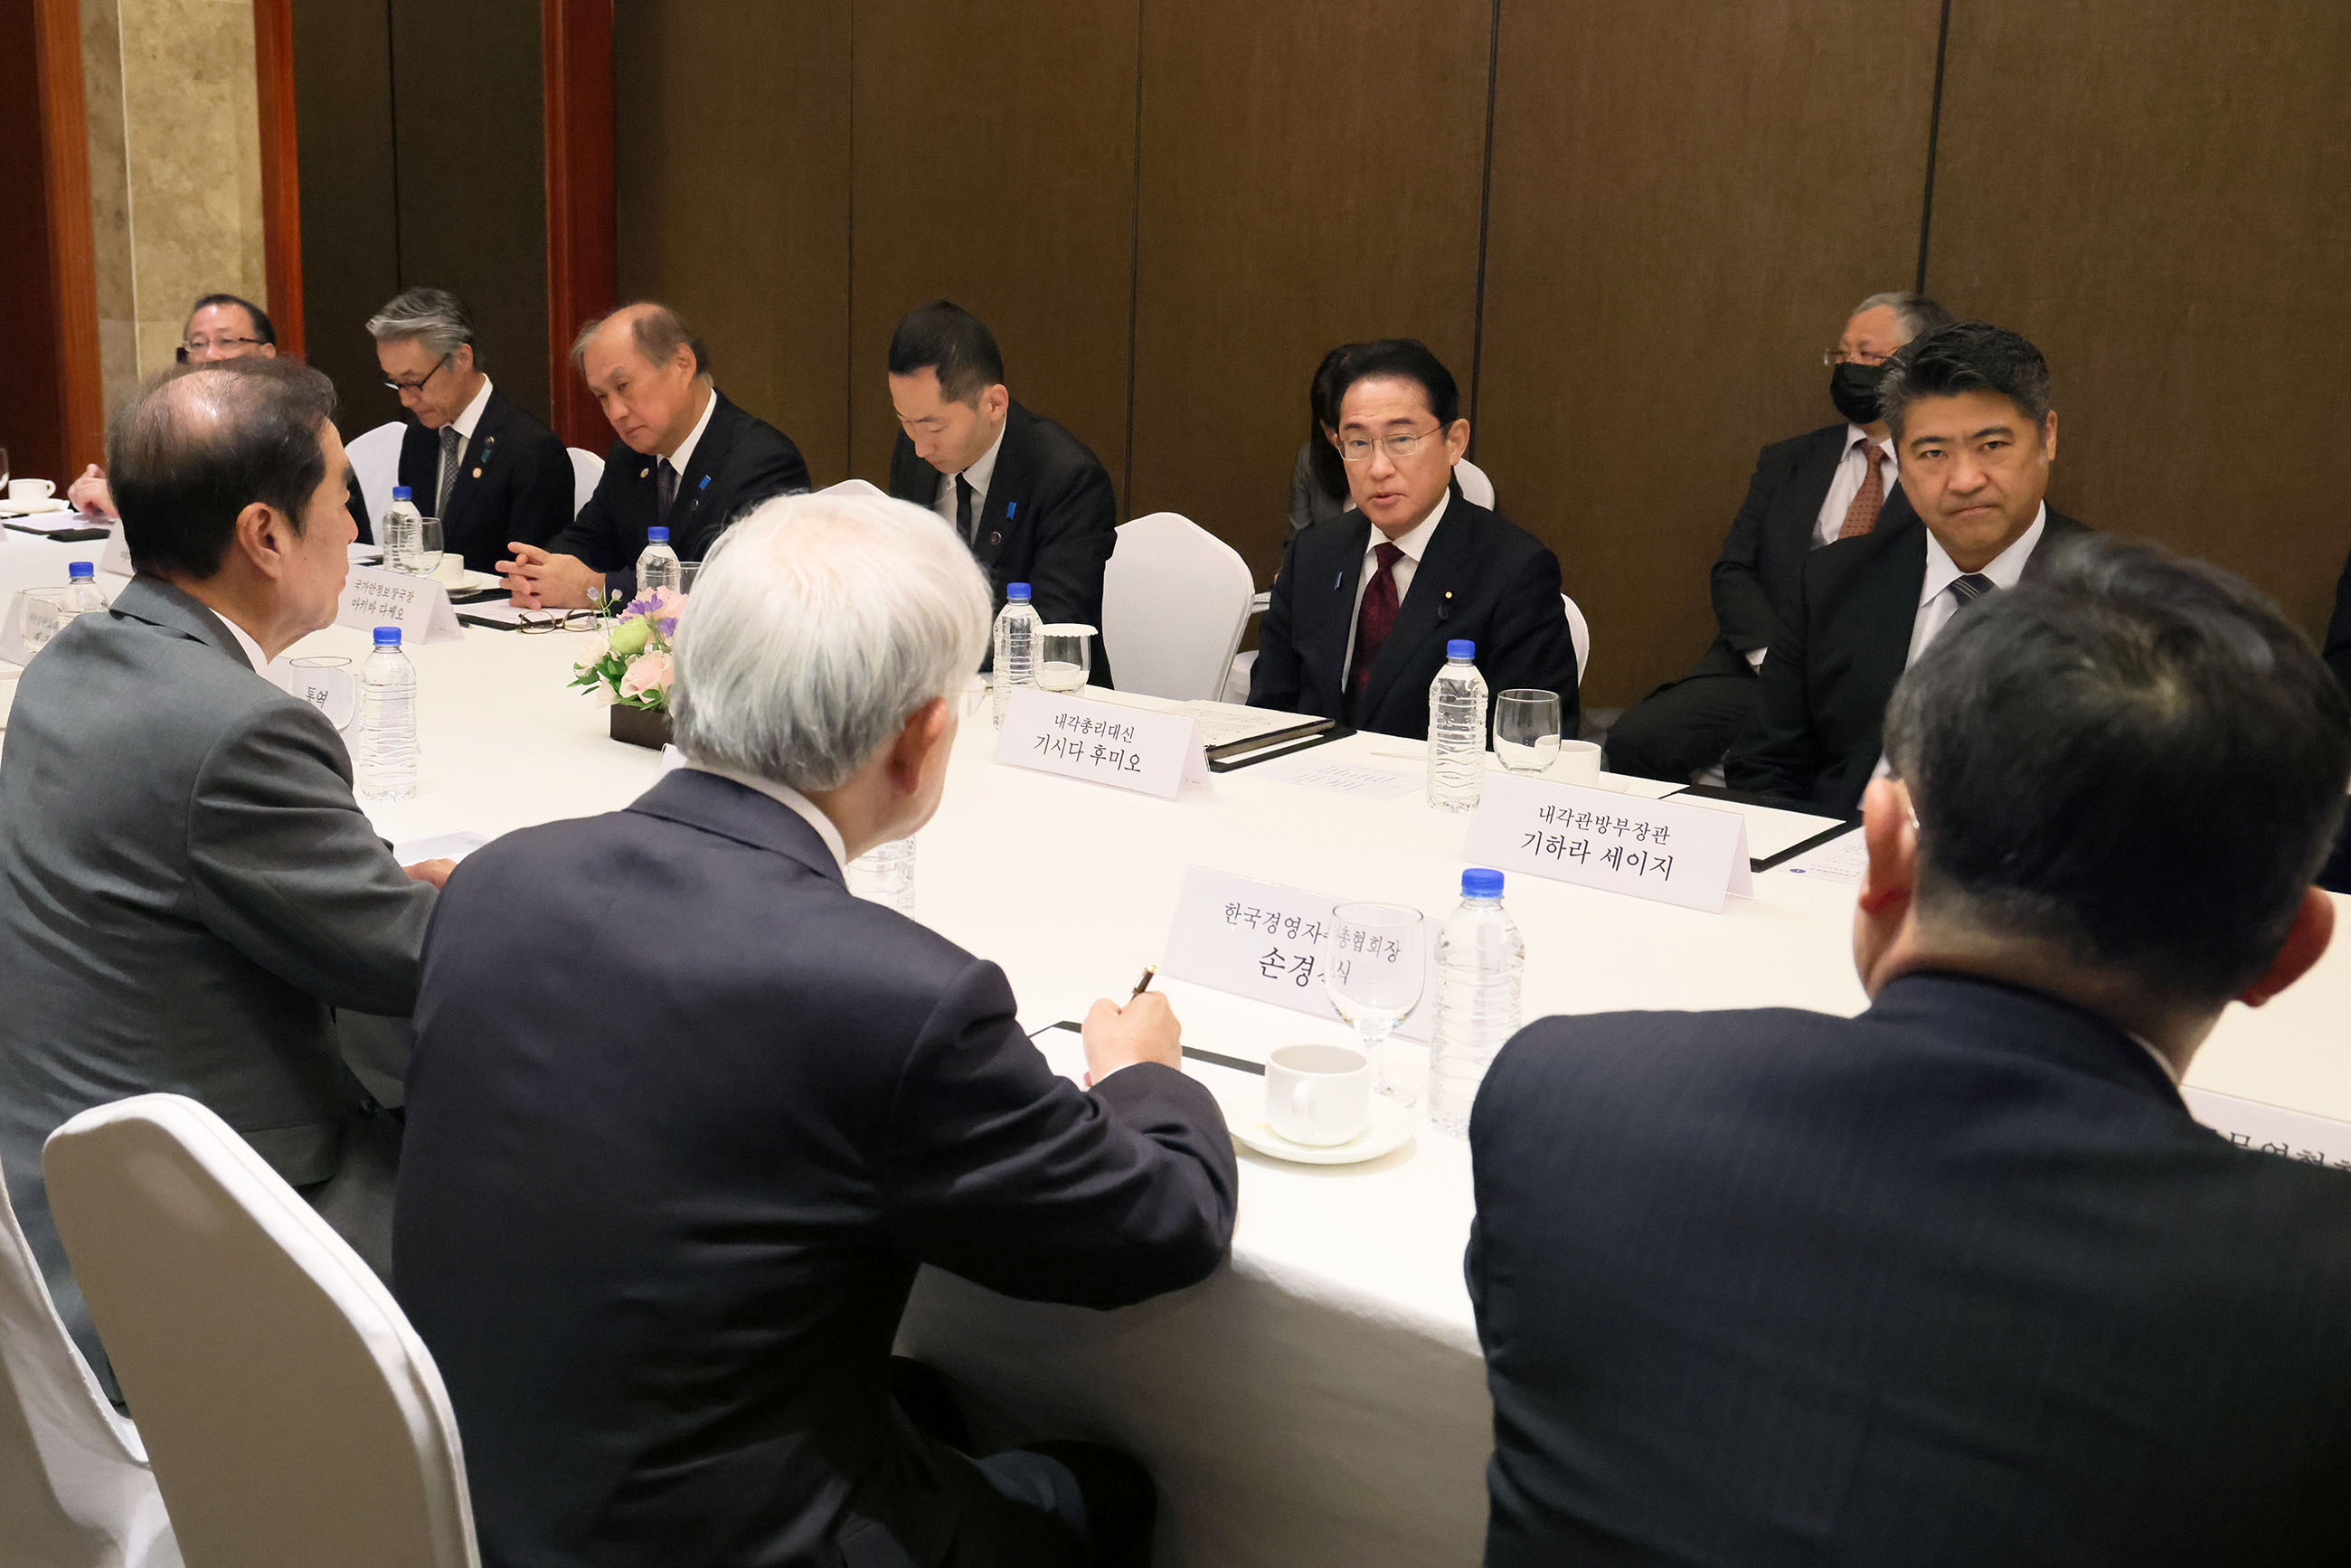 Prime Minister Kishida having a talk with members of Korean business community (2)